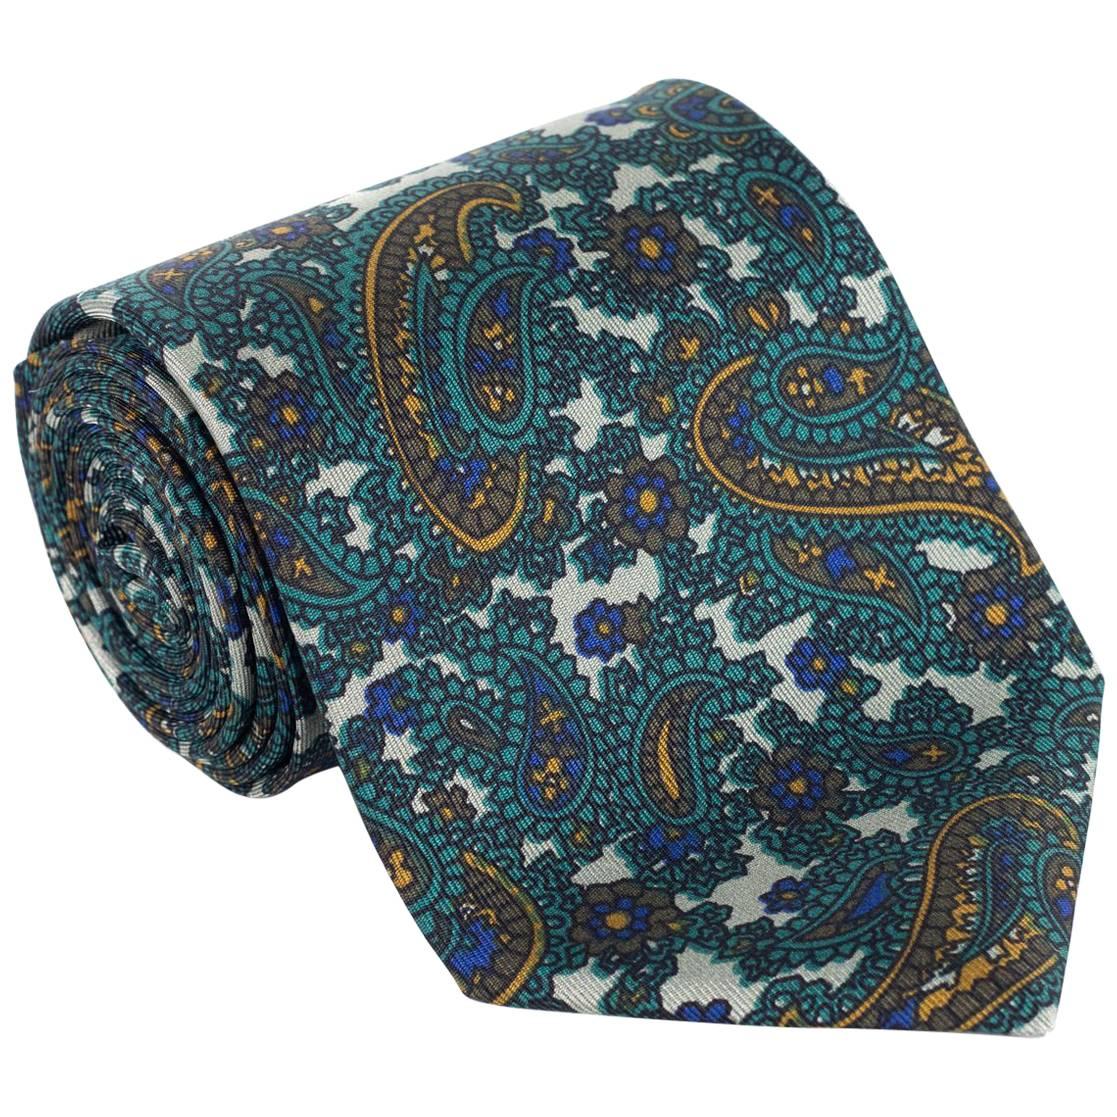 Java Brown Paisley Silk Necktie $95 Retail New Lord R Colton Studio Tie 